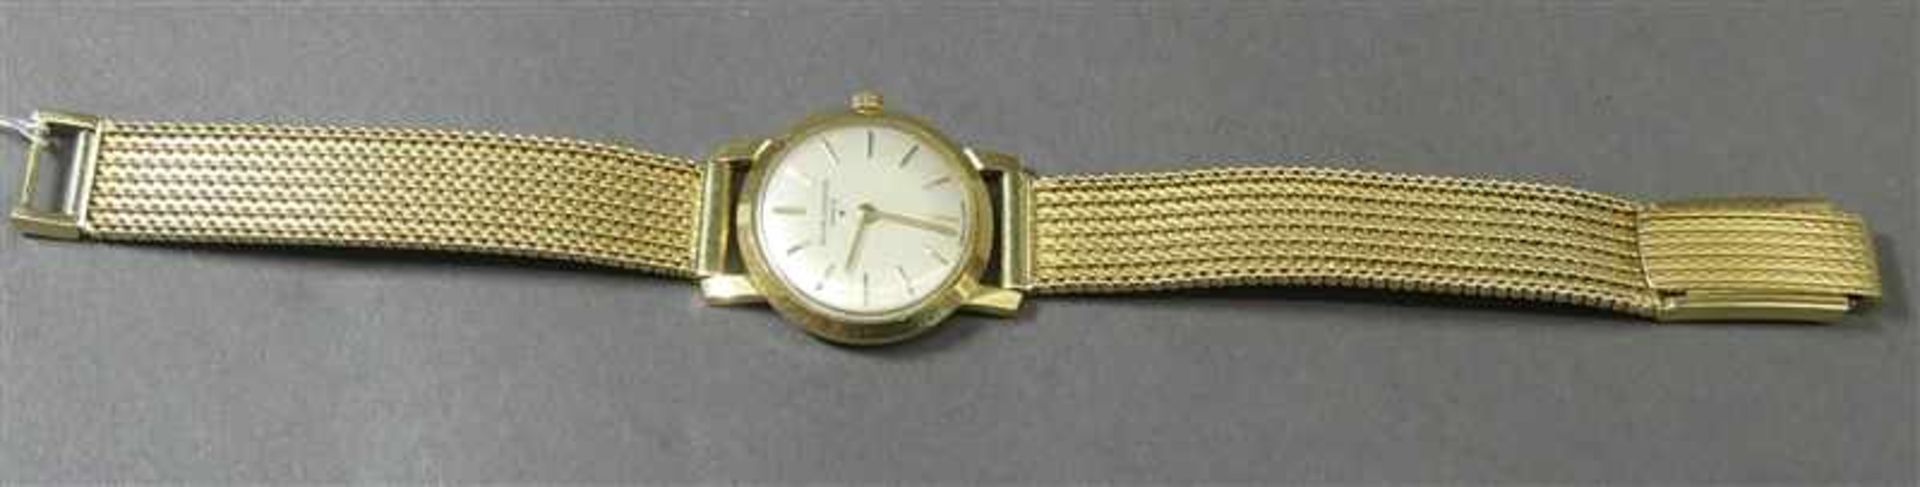 Damenarmbanduhr 14 kt. Gelbgold, "Baume & Mercier", Handaufzug, Milanesearmband, weißes Zifferblatt,